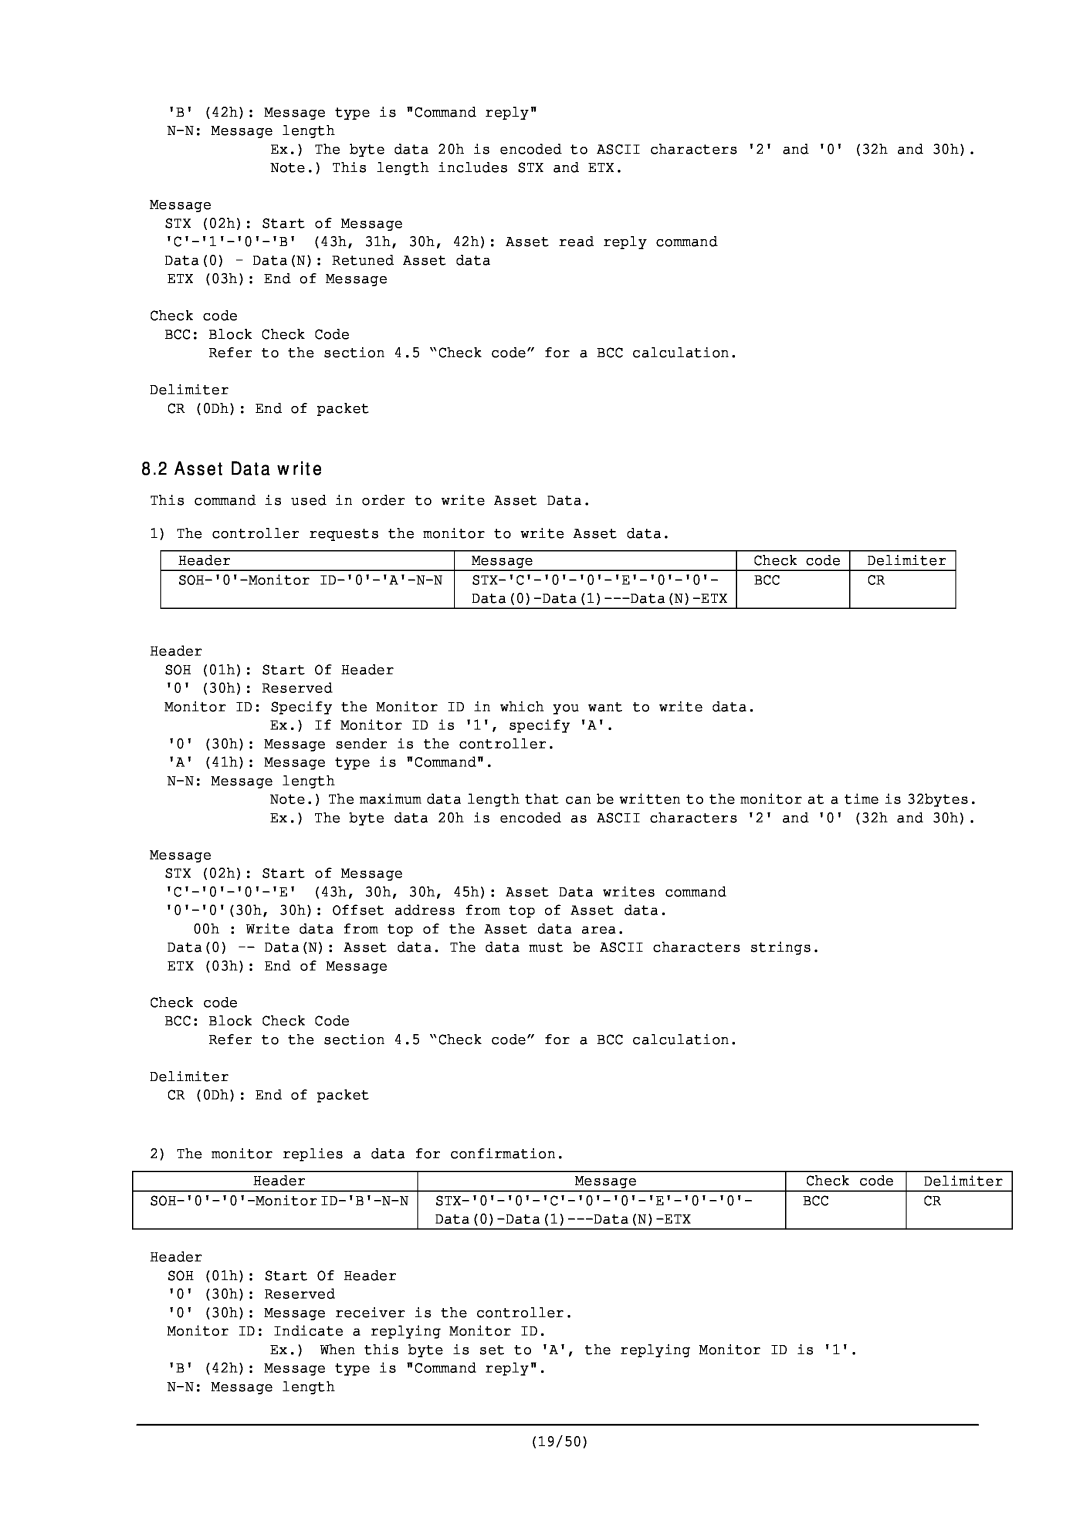 NEC RS-232C user manual Asset Data write 